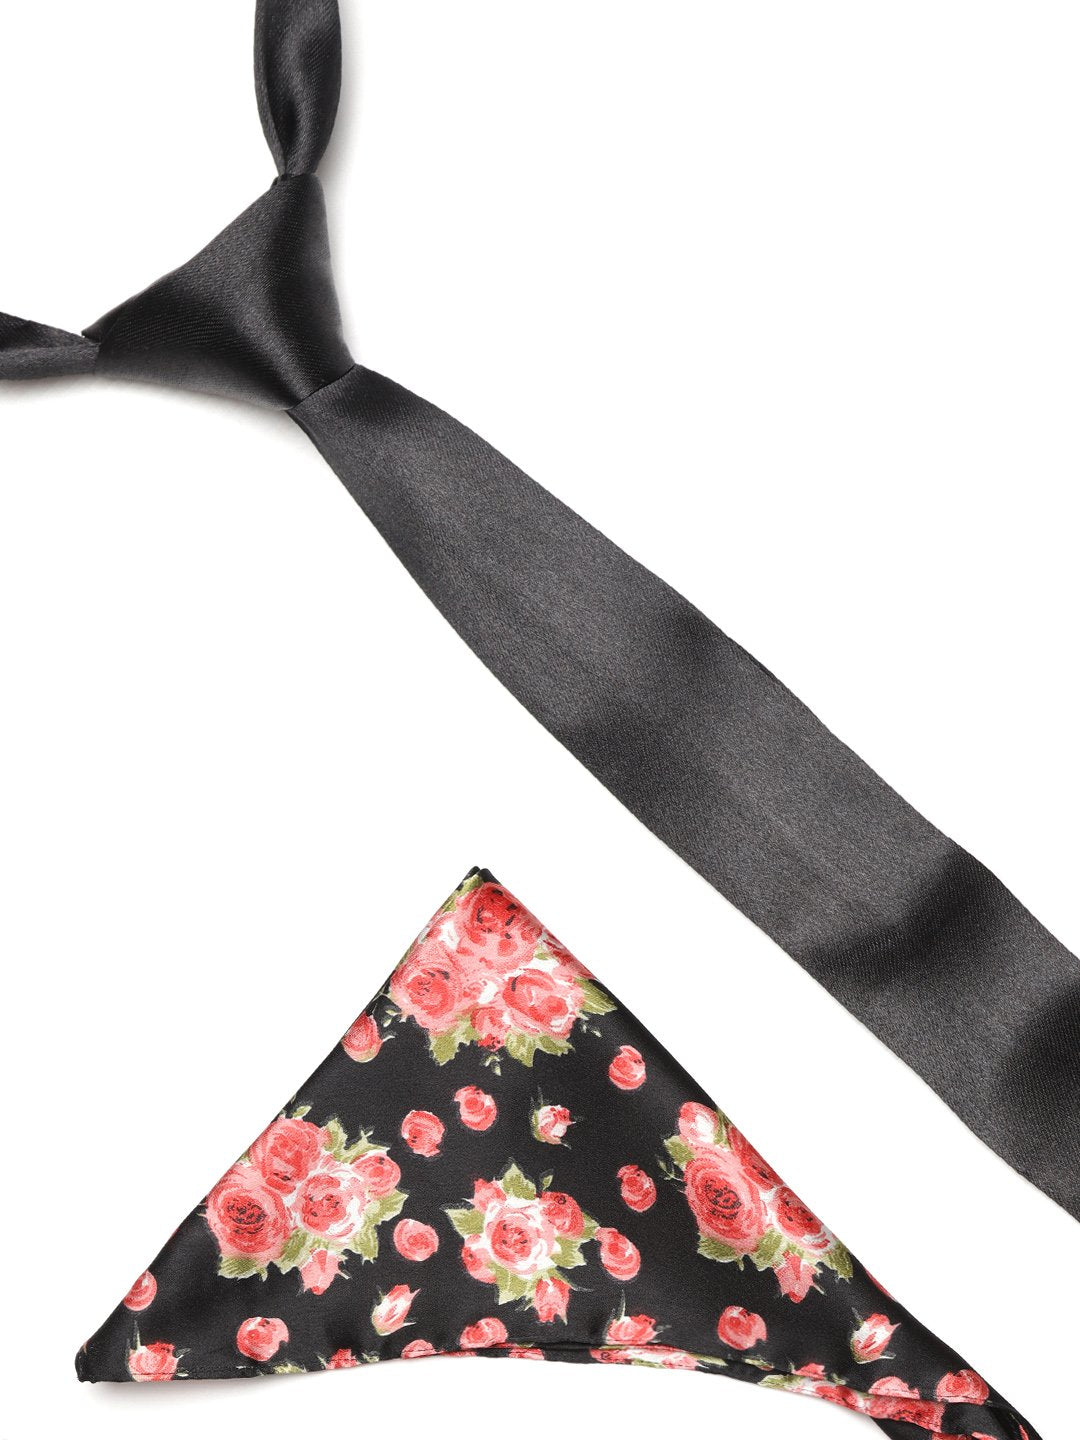 Lazy panda black tie with printed pocket square